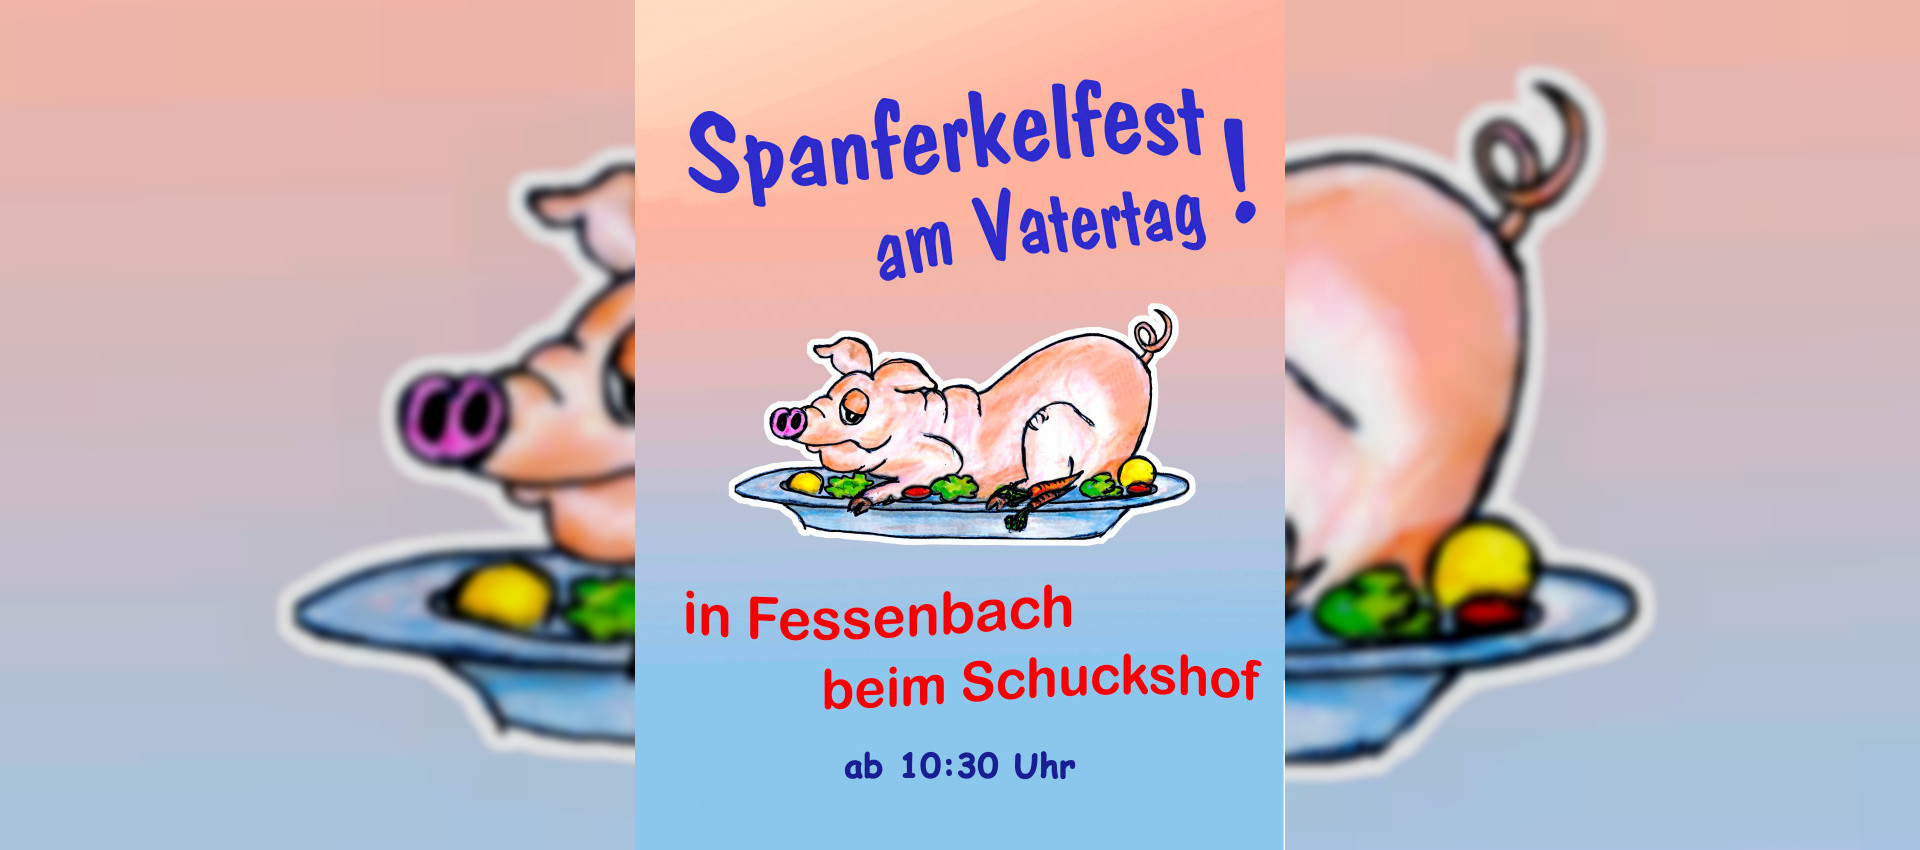 Spanferkelfest am Vatertag in Fessenbach - Musikverein Fessenbach e.V.